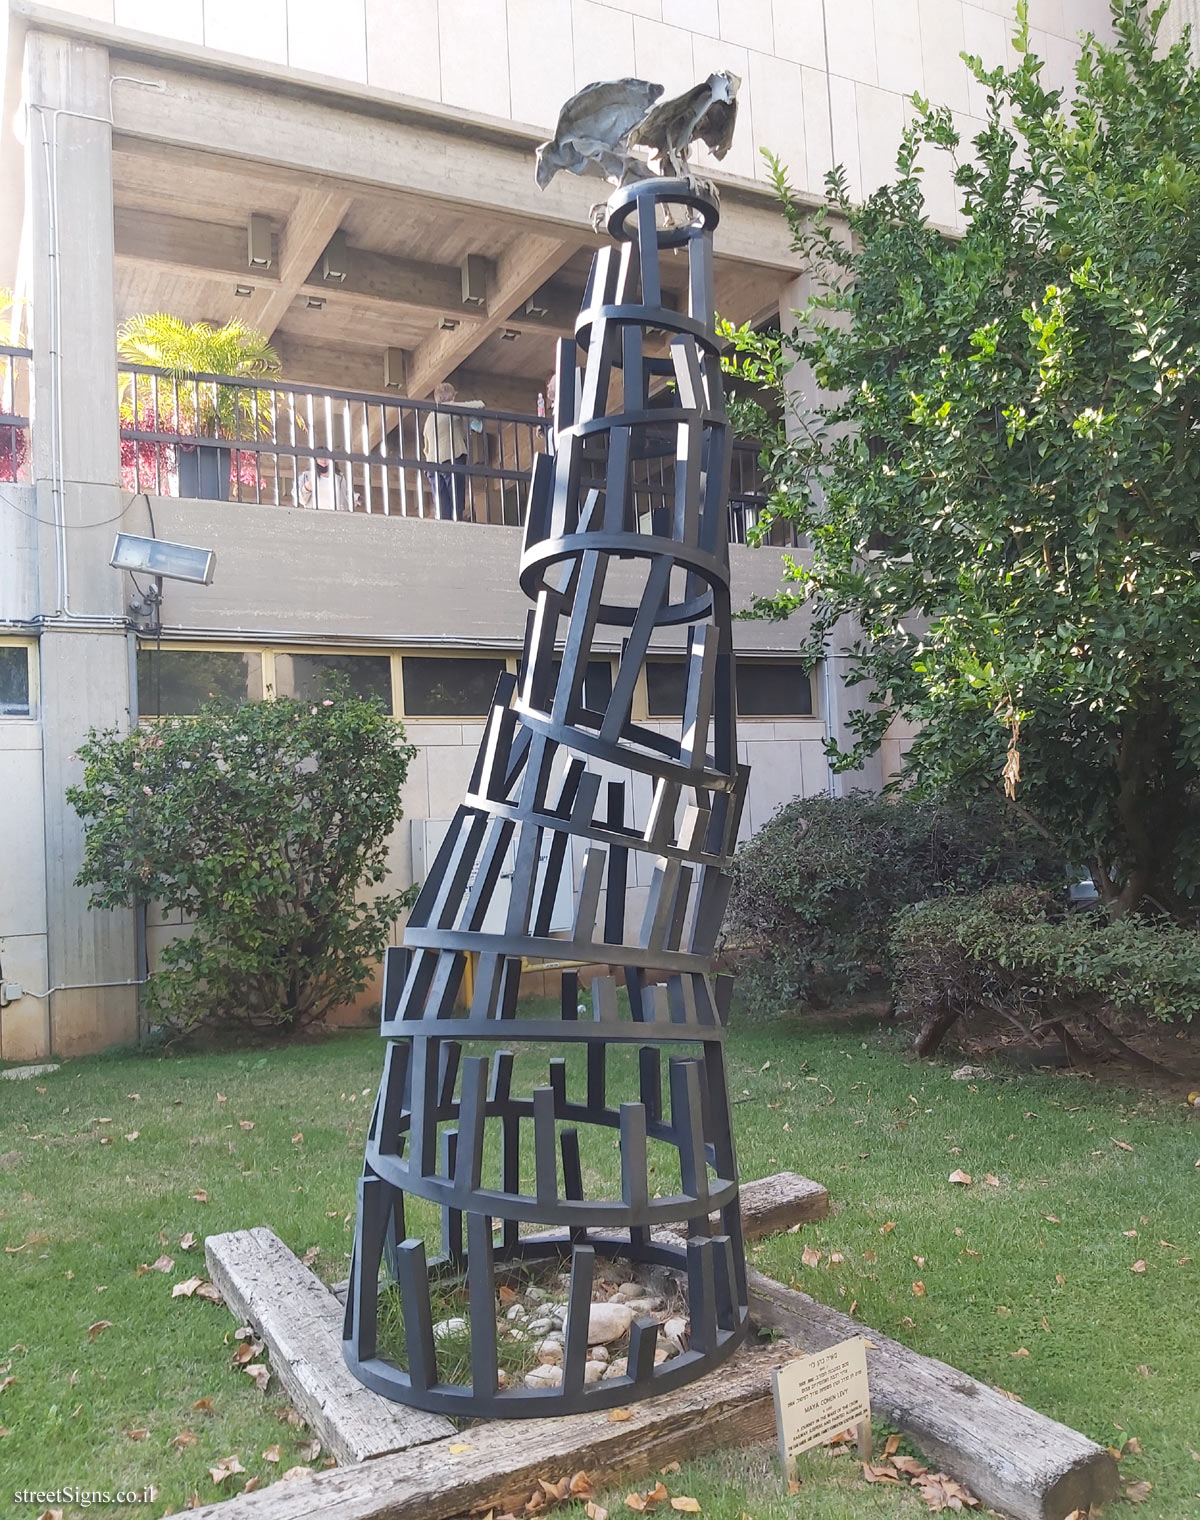 Tel Aviv - "A Journey in the Wake of the Crow" - Outdoor sculpture by Maya Cohen Levi - Berkovitch St 5, Tel Aviv-Yafo, Israel